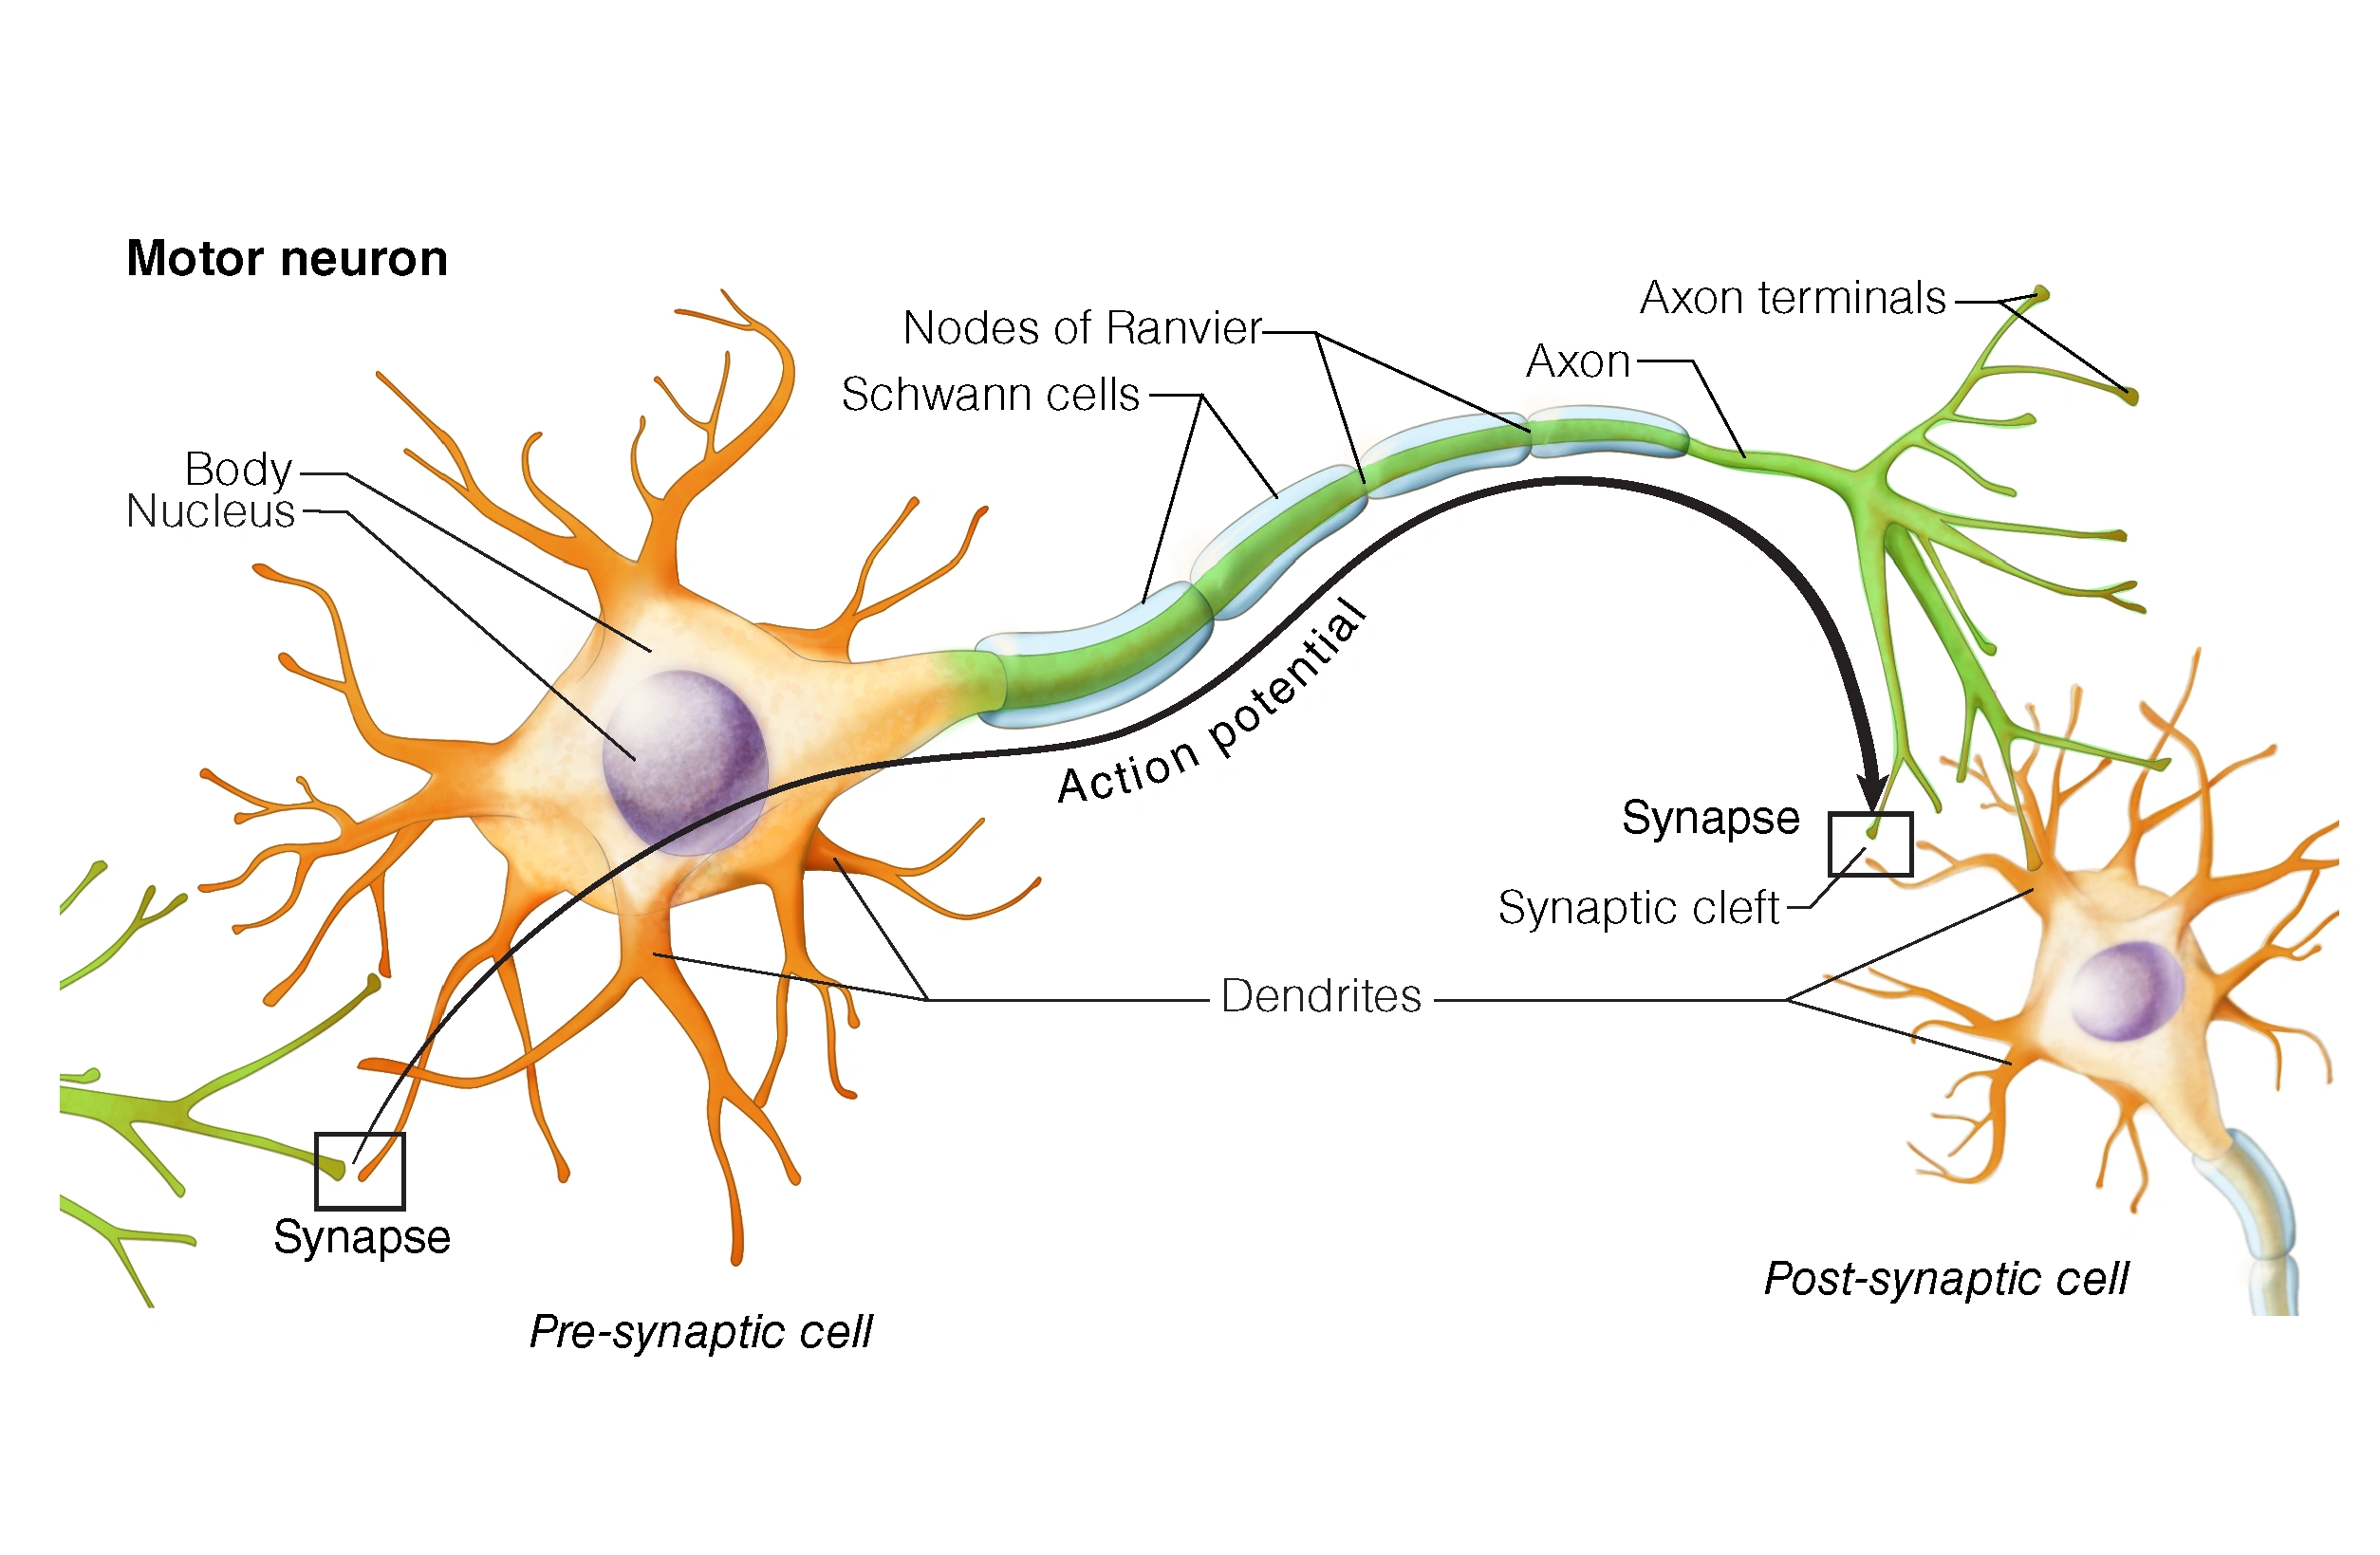 Figure 1. Motor Neuron